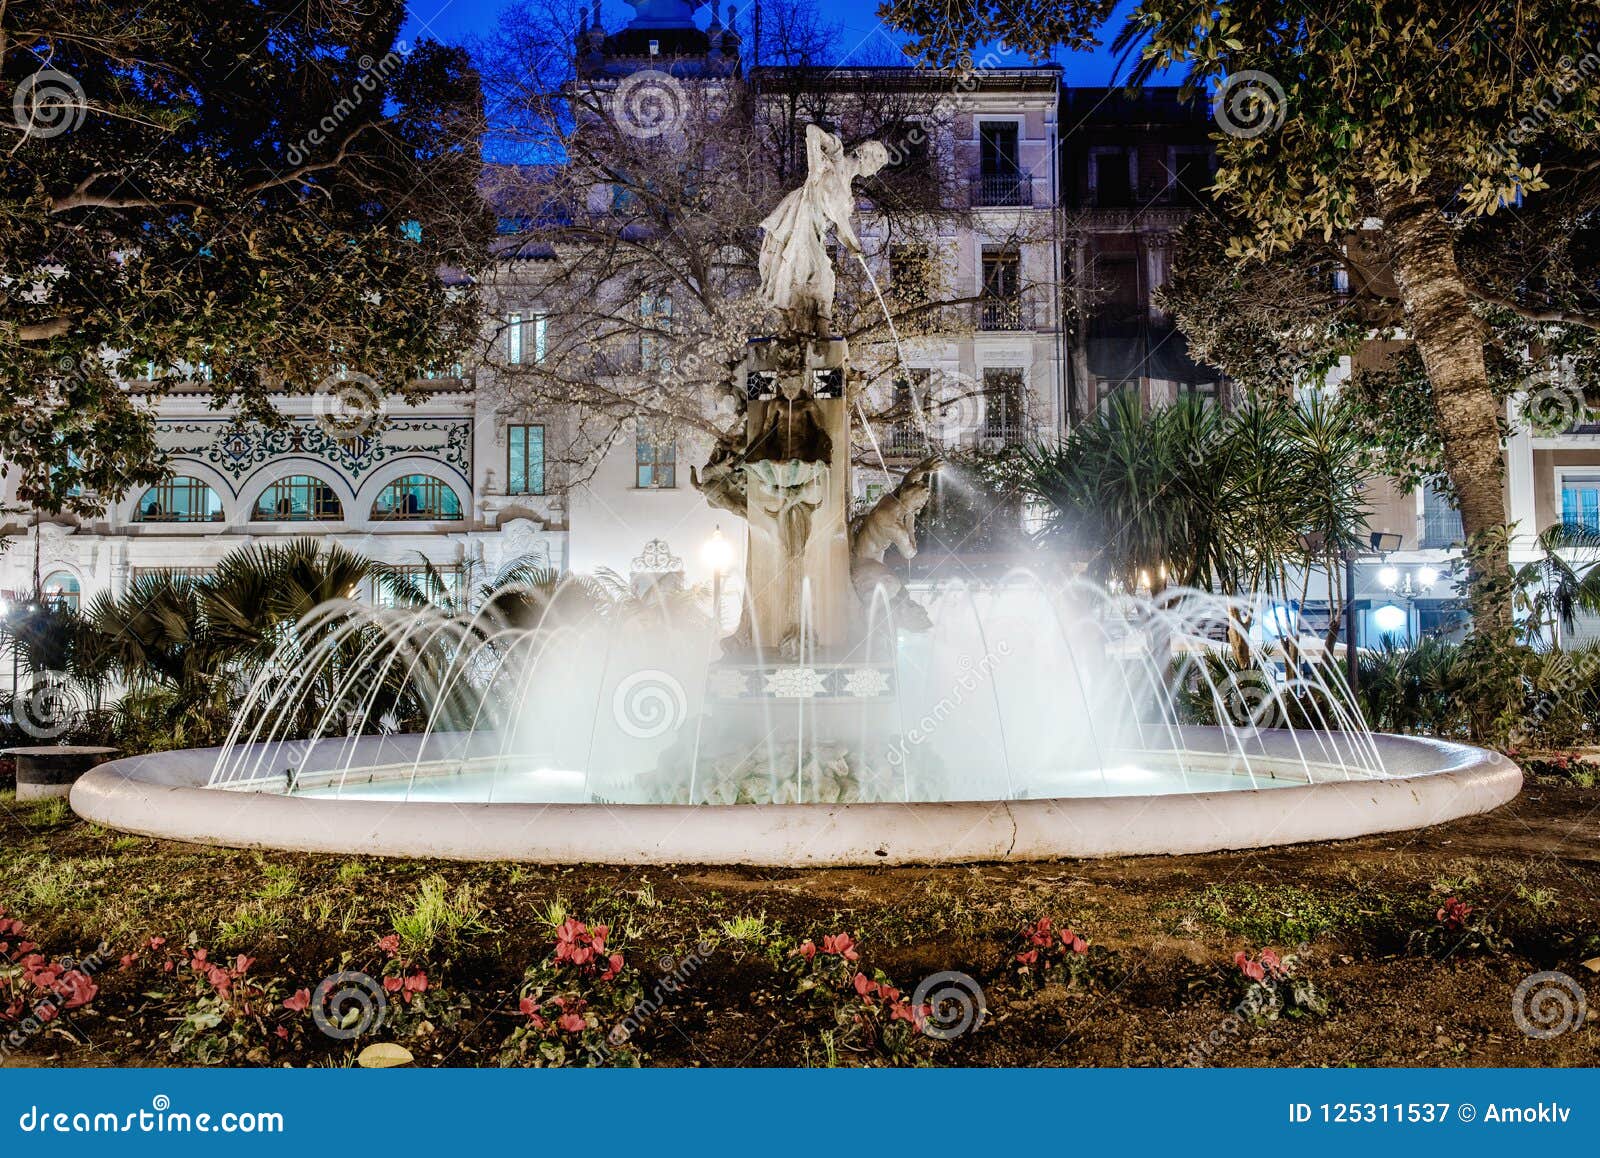 fountain at plaza gabriel miro square. spain